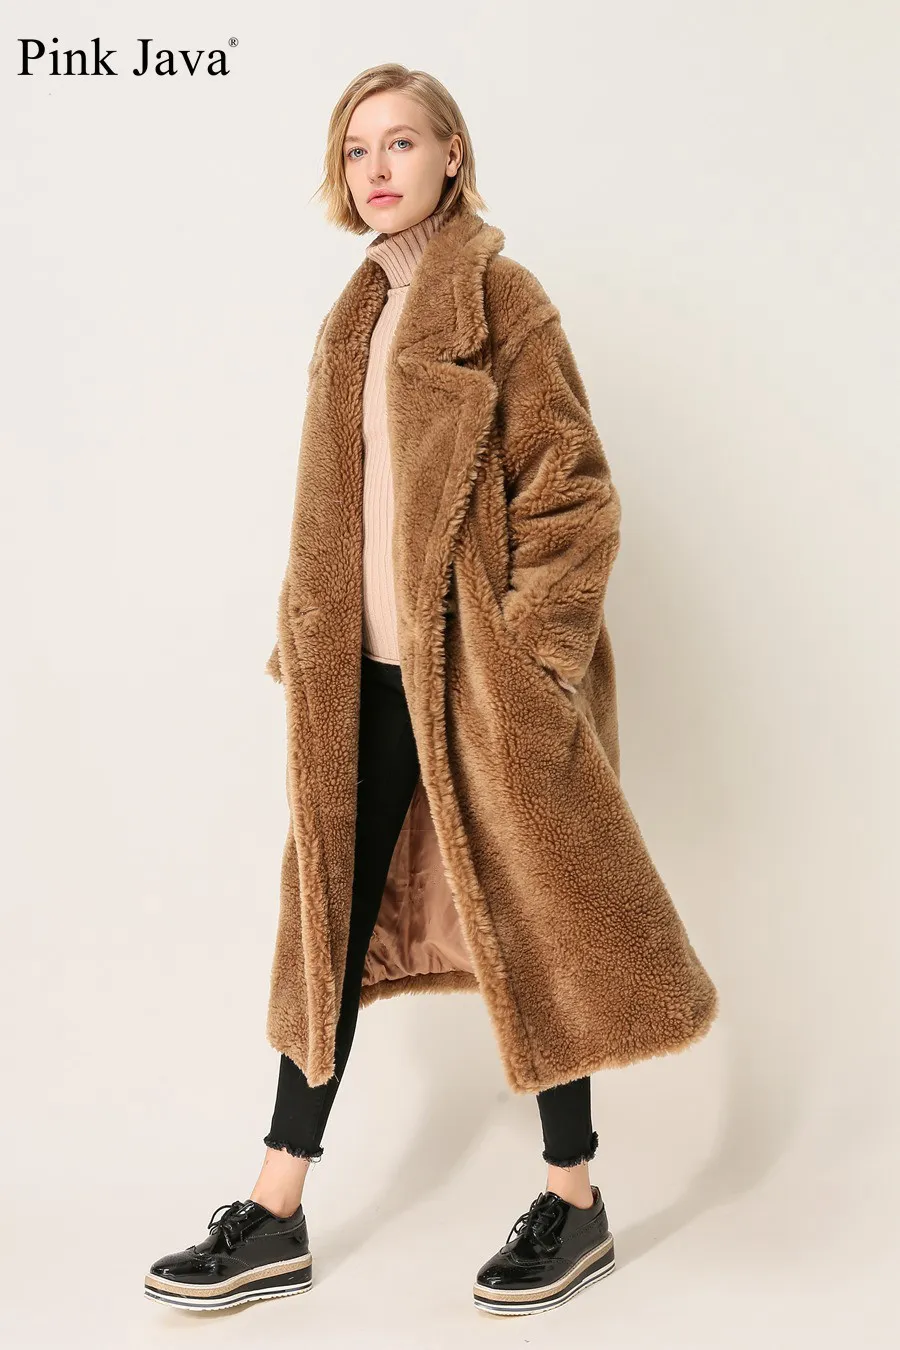 PINK JAVA QC1848 arrival real sheep fur coat long style camel teddy coat over size winter women coat 201214